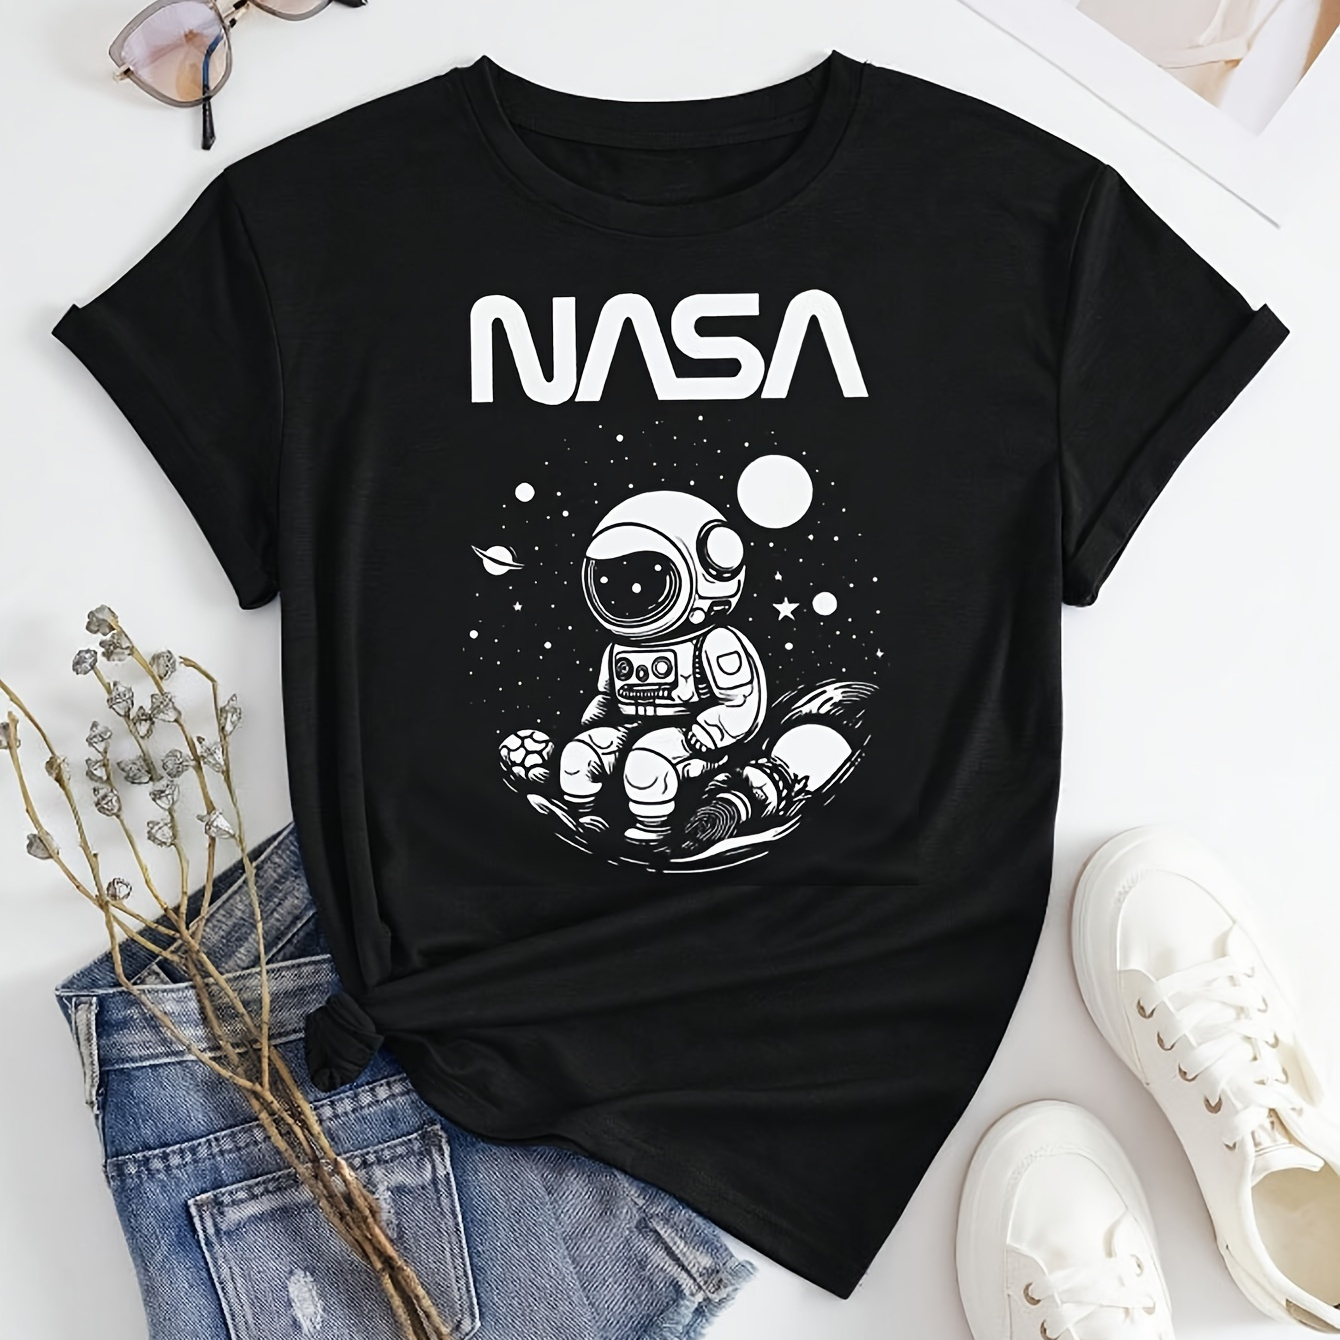 

Astronaut Print Crew Neck T-shirt, Casual Short Sleeve T-shirt For Spring & Summer, Women's Clothing